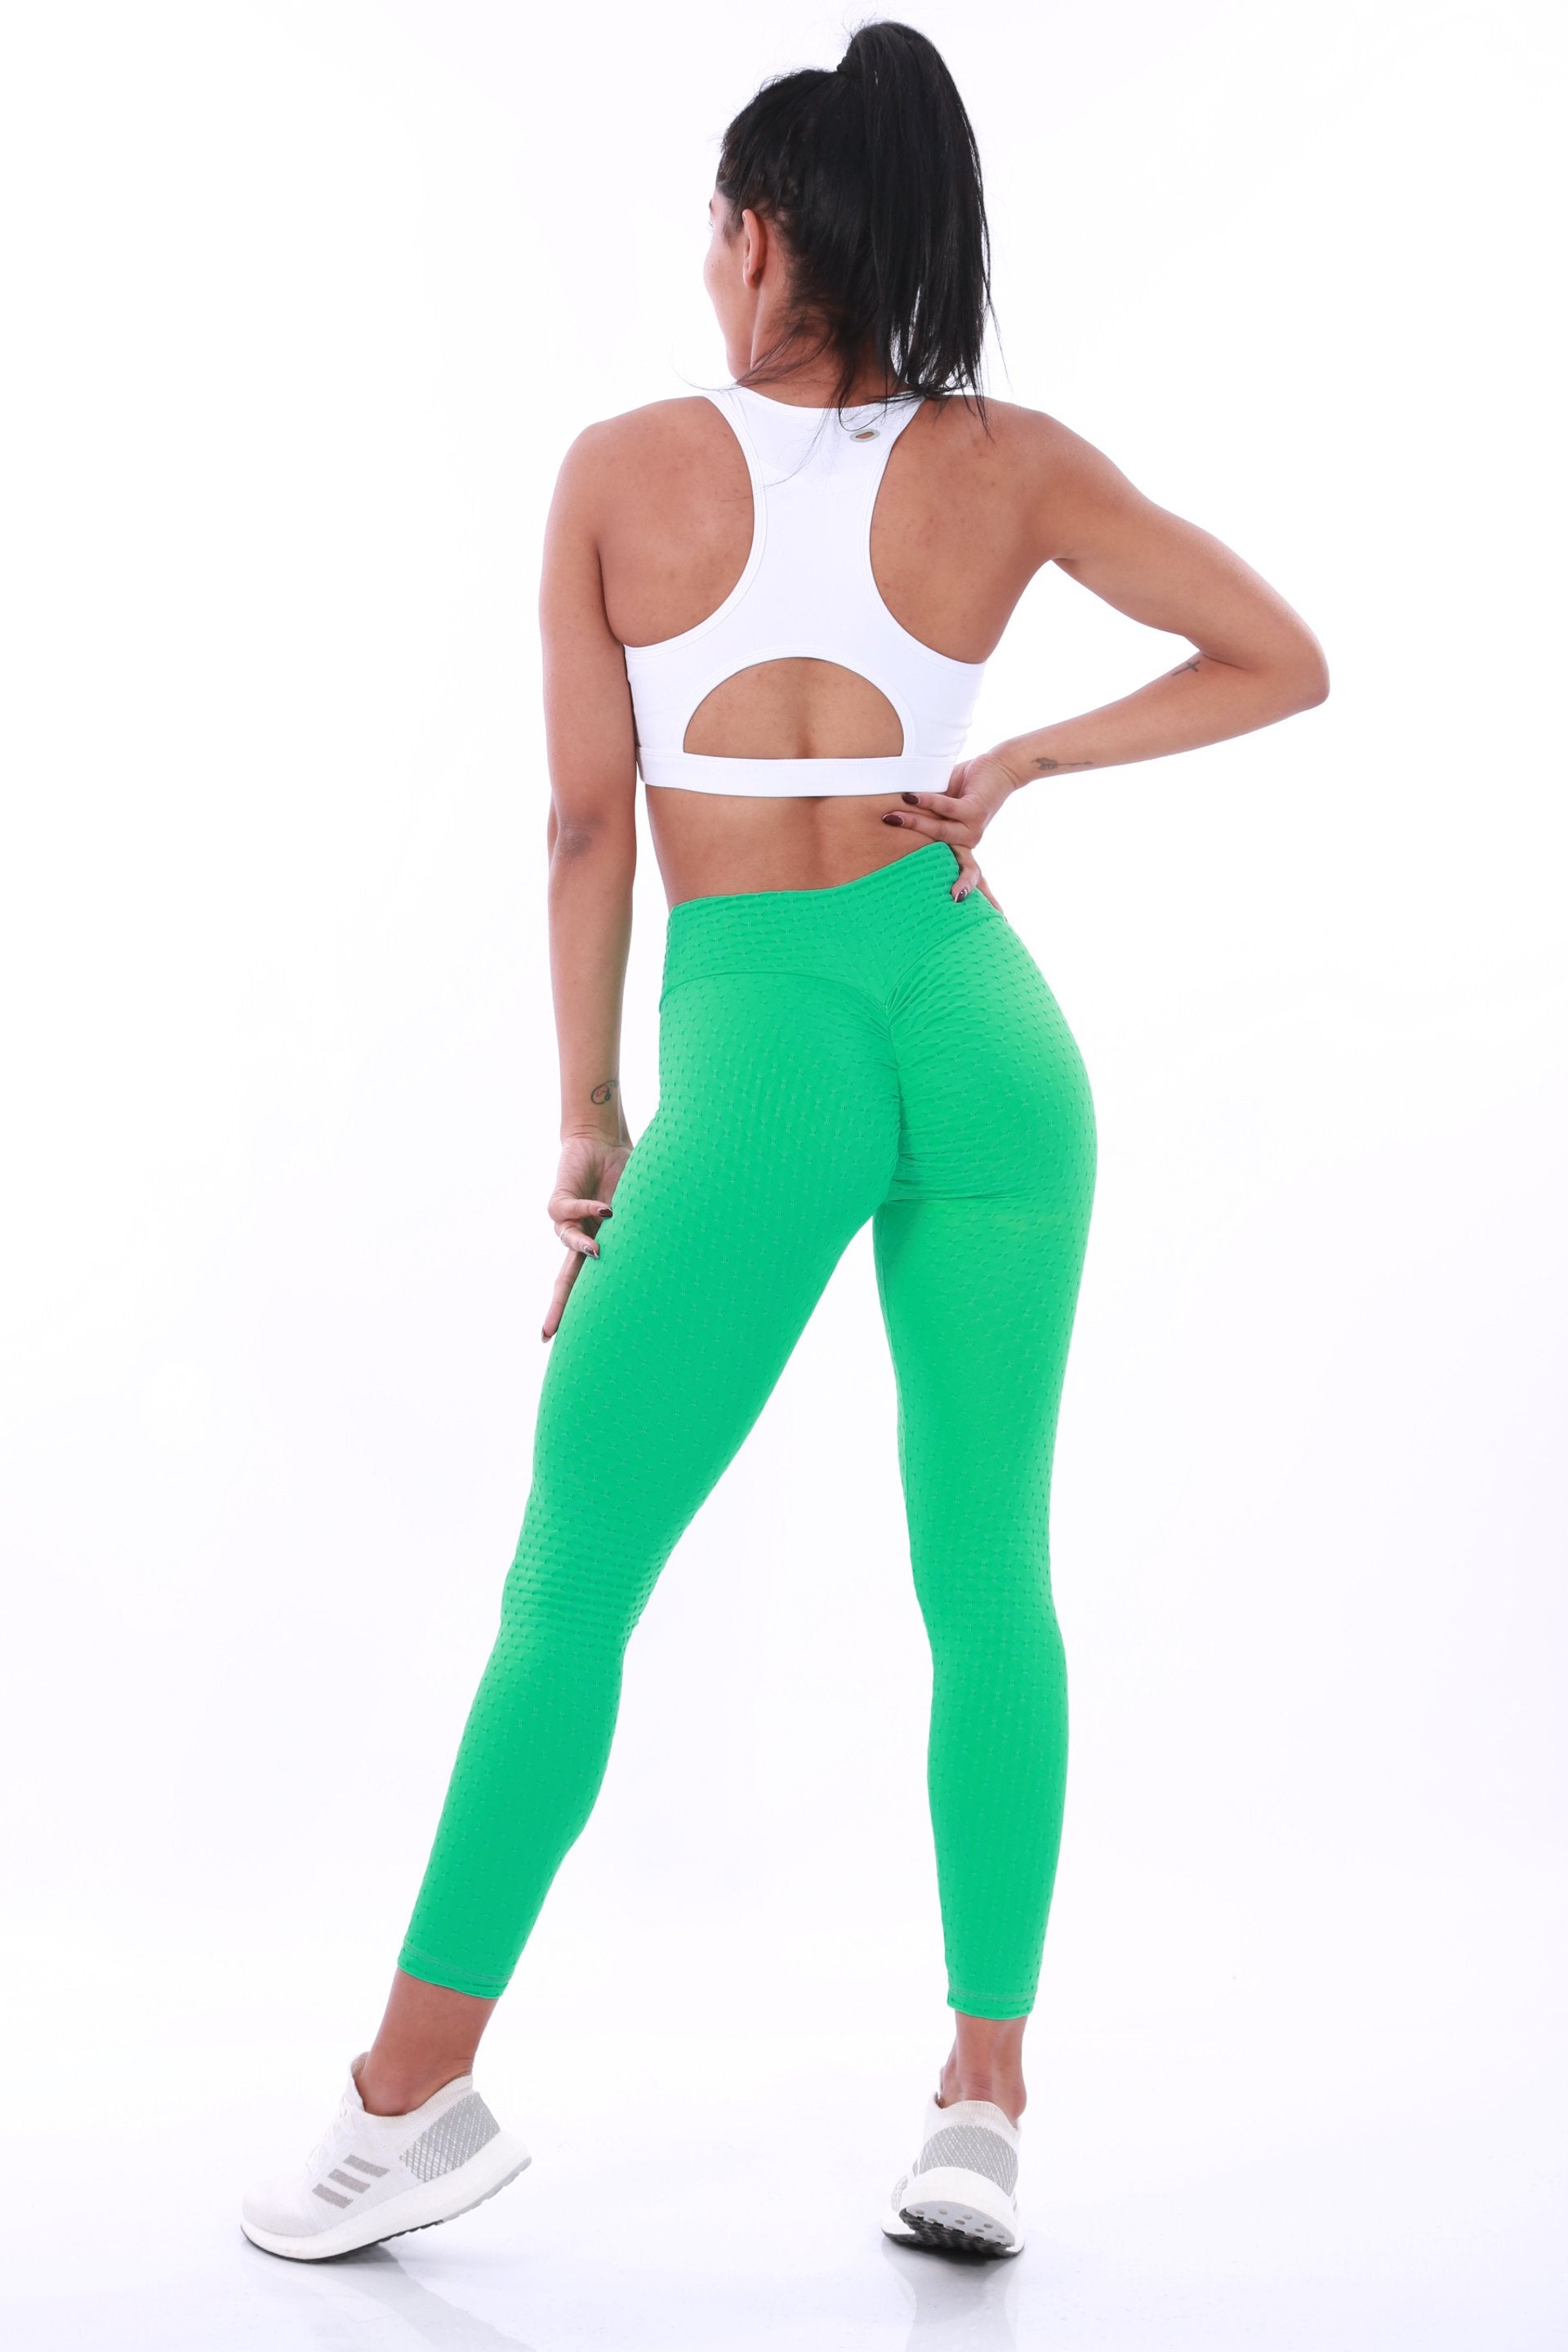 Wonderfit Cheeky AKA ‘Tik Tok Leggings’ - Anti cellulite leggings - Green